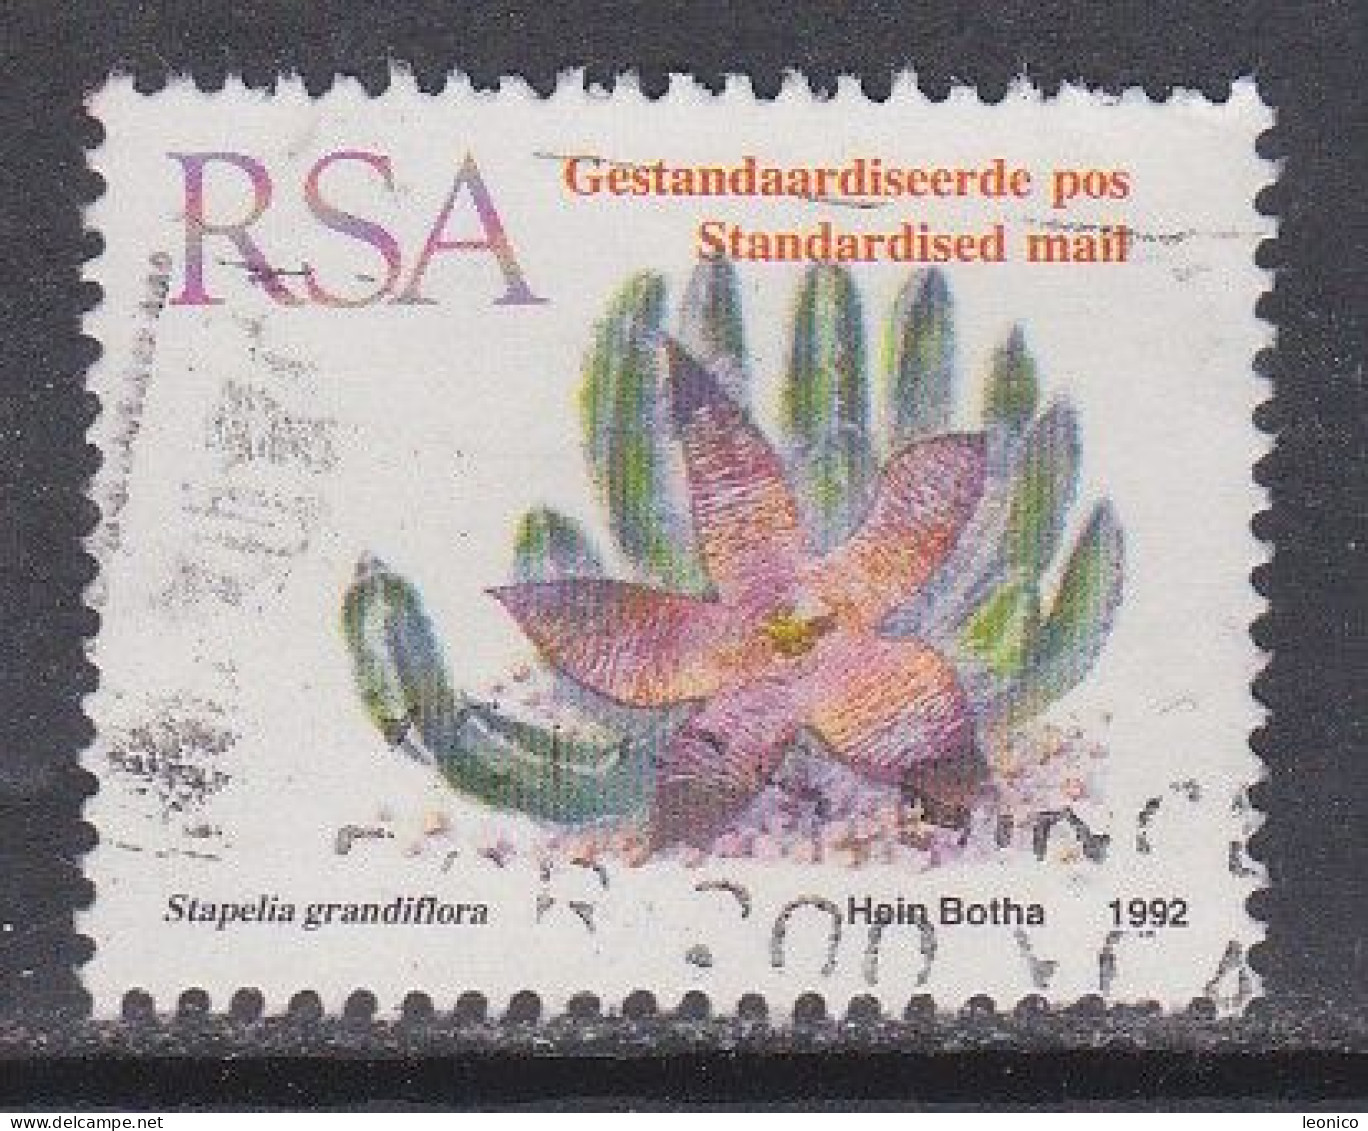 SOUTH AFRICA 1993 / Mi: 854 / Yx567 - Oblitérés